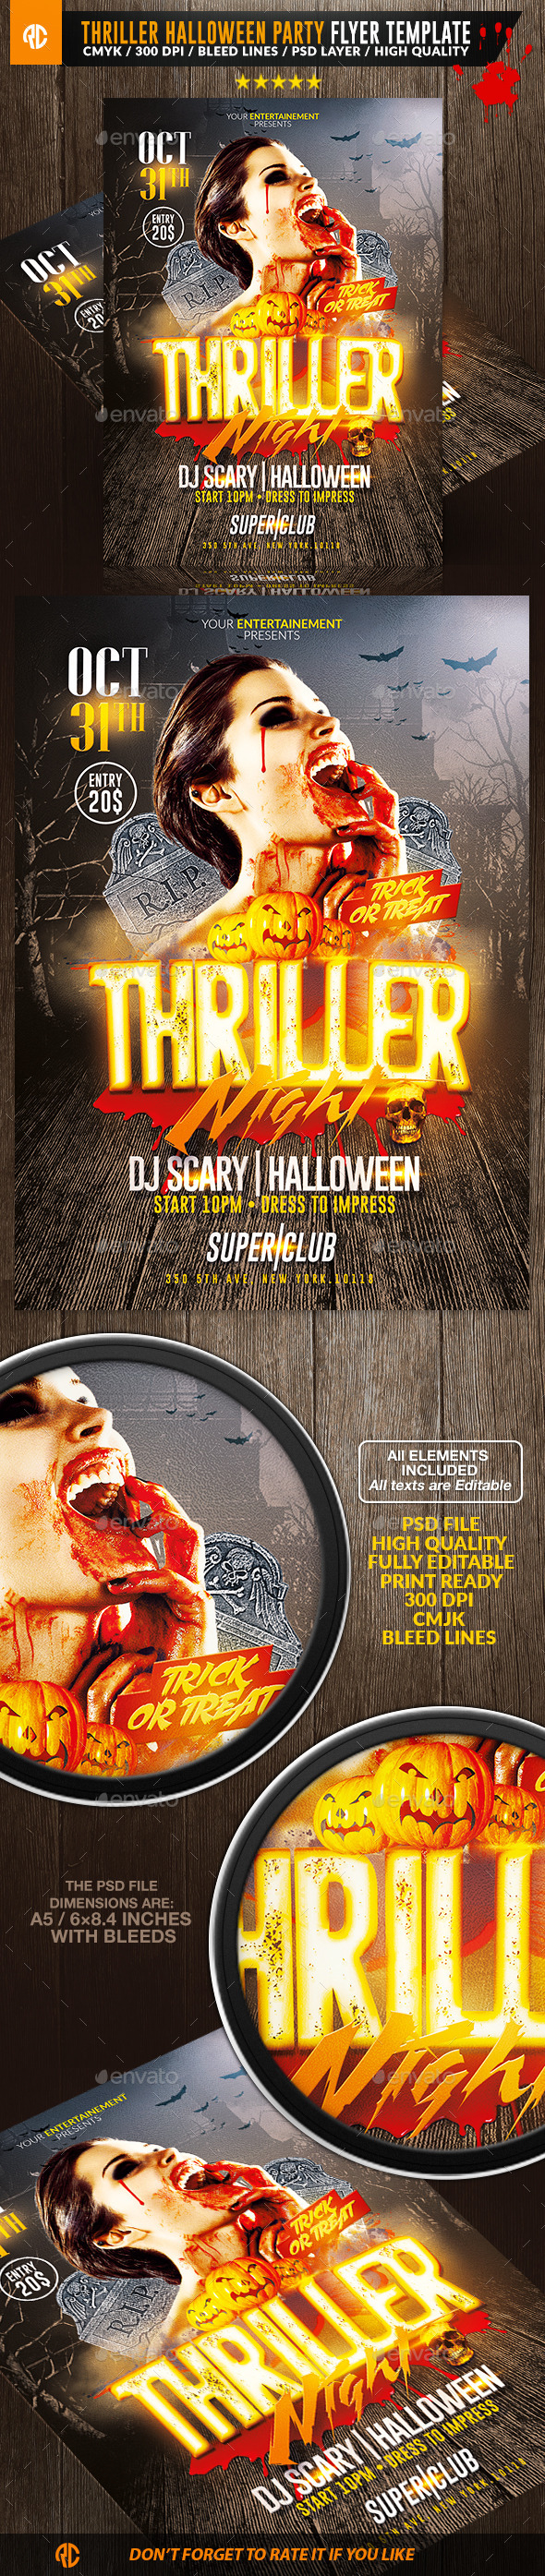 Thriller Vampire Halloween | Flyer Template